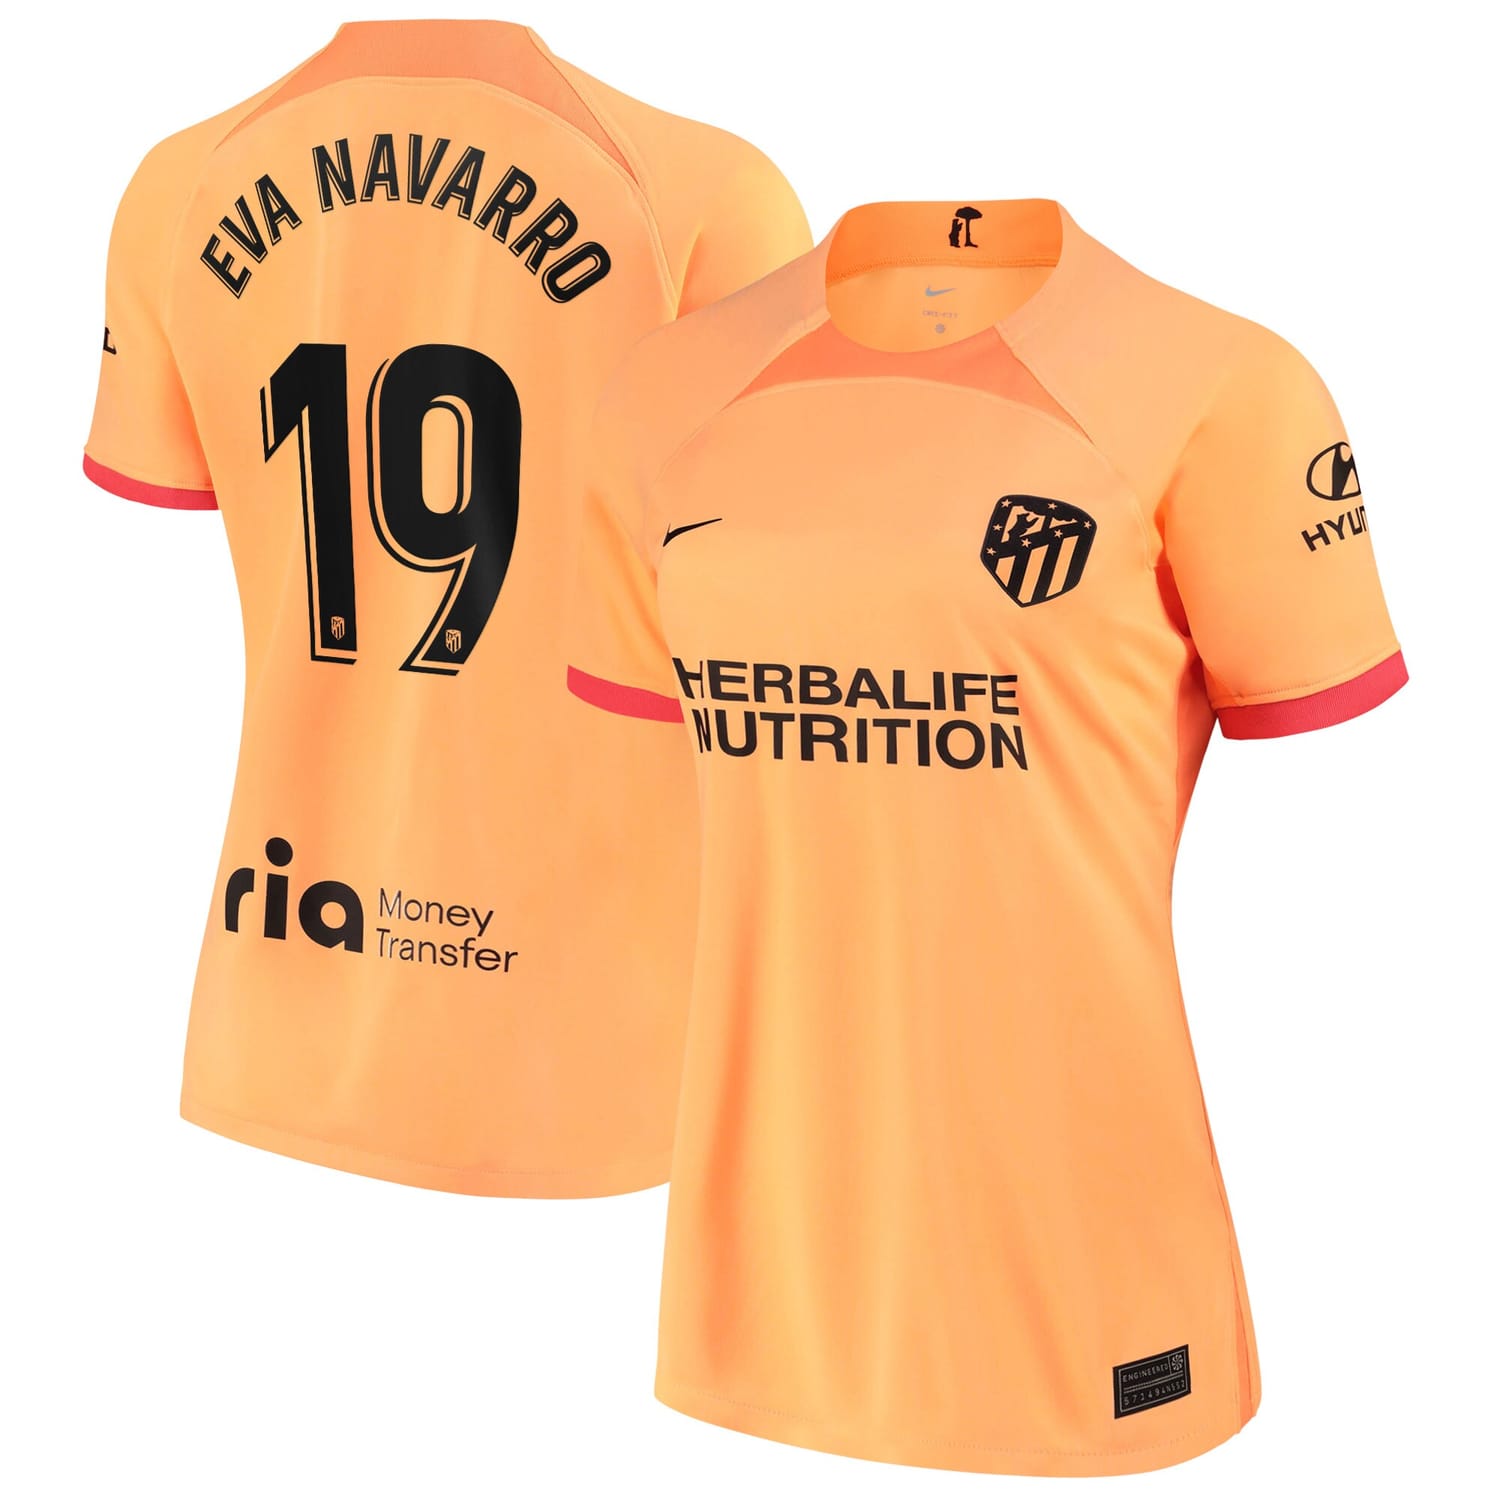 La Liga Atletico de Madrid Third Jersey Shirt 2022-23 player Eva Navarro 19 printing for Women